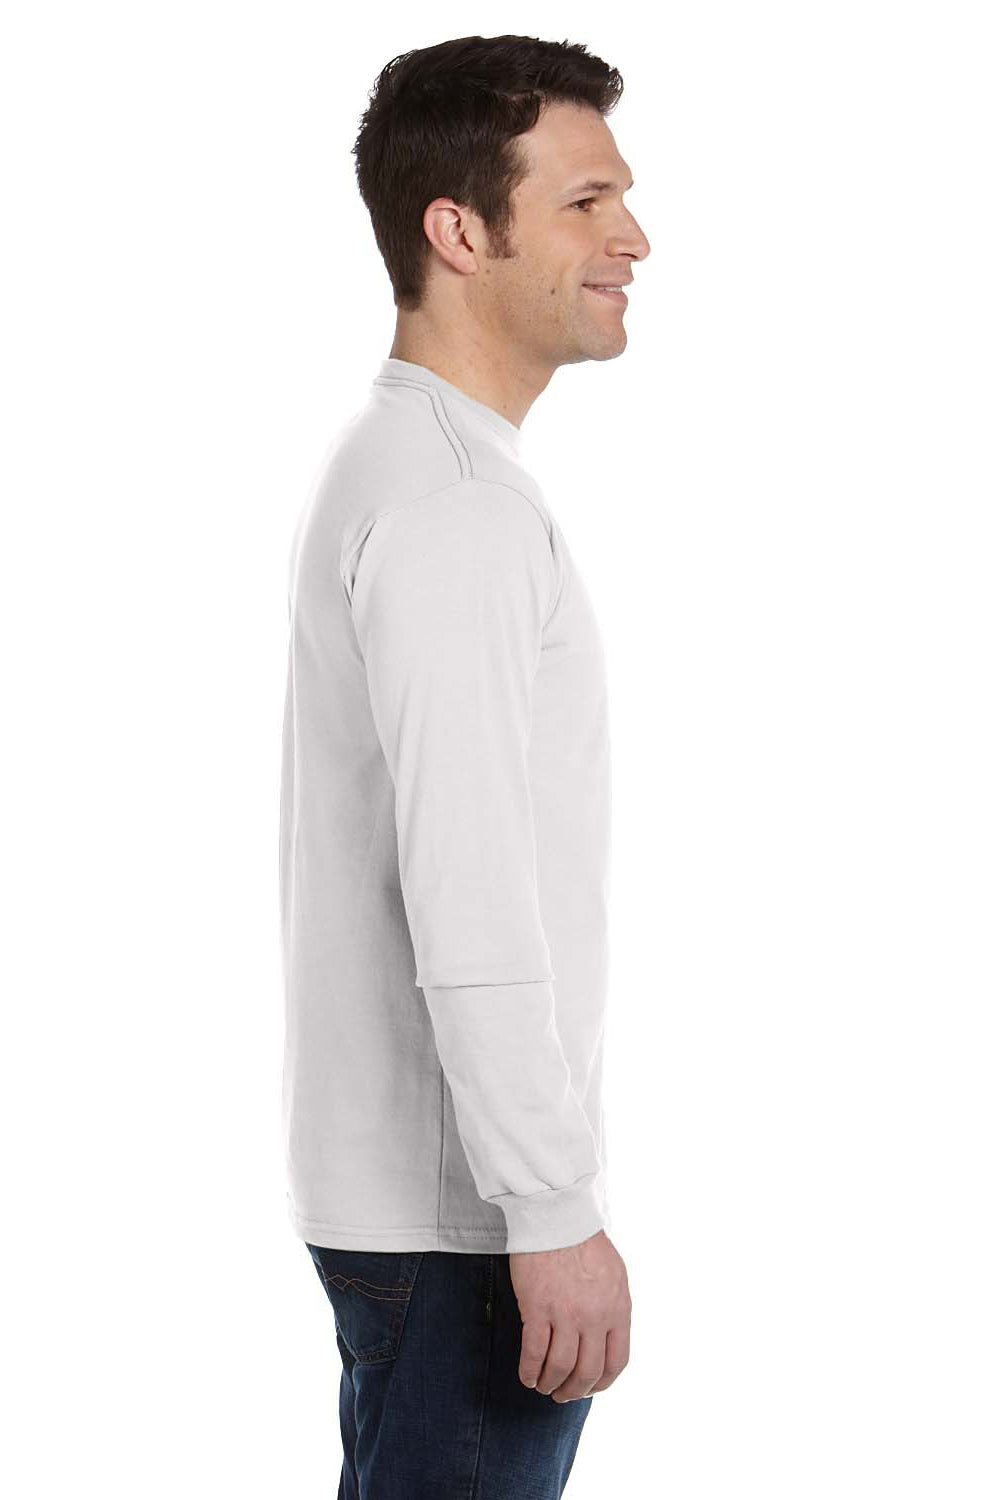 Econscious EC1500 Mens Long Sleeve Crewneck T-Shirt White Side